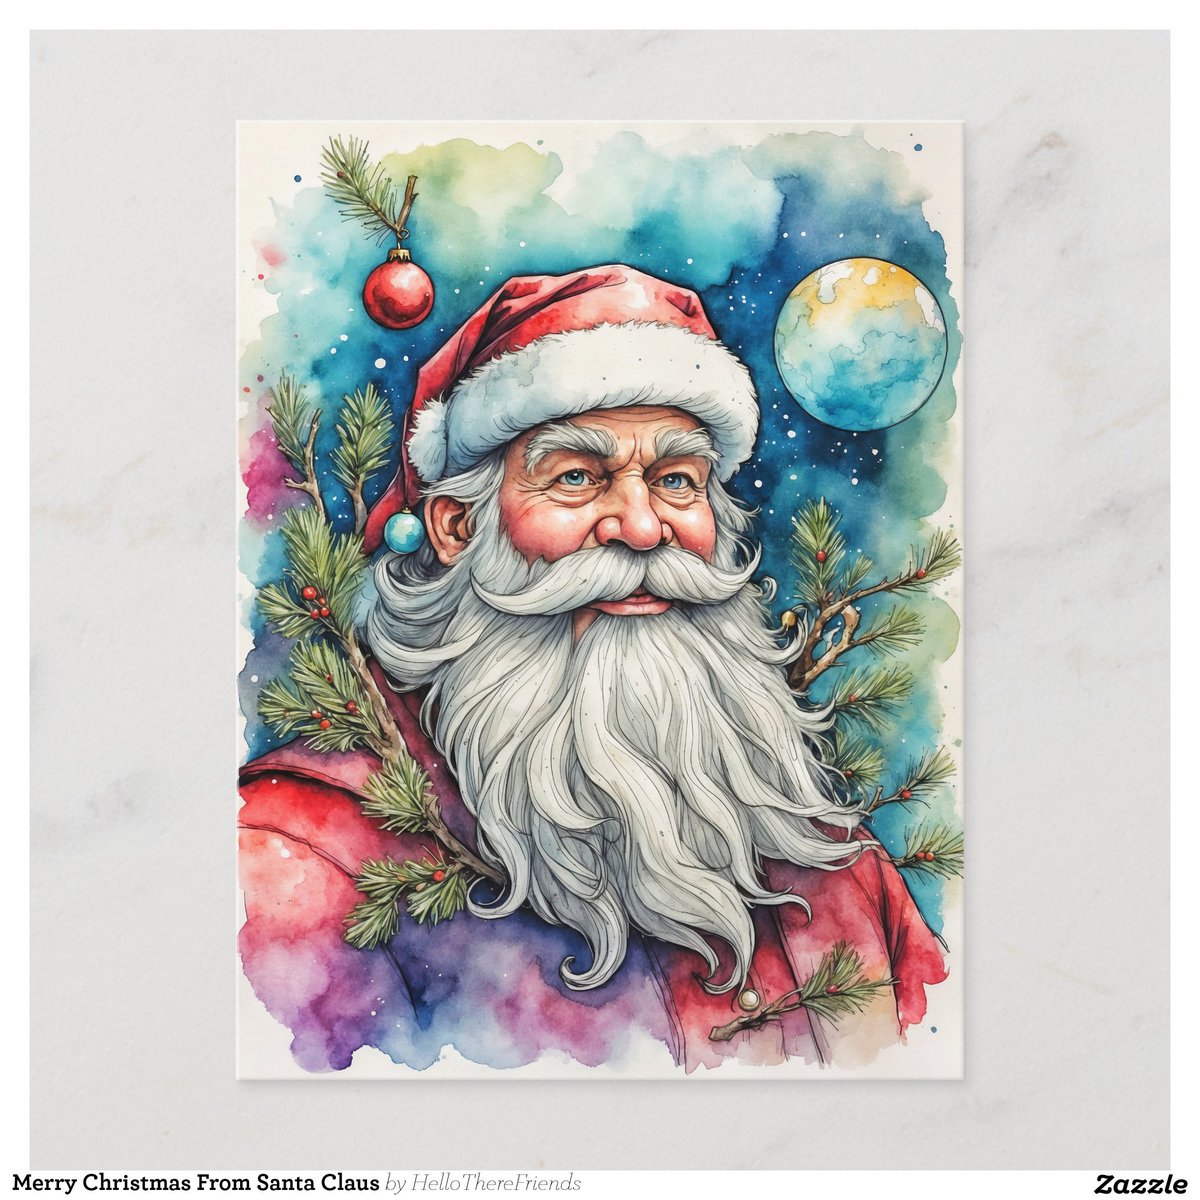 Merry Christmas From Santa Claus Postcard→zazzle.com/z/0cr4rsge?rf=…

#Postcards #ChristmasPostcards #MerryChristmas #HappyHolidays #SeasonsGreetings #TisTheSeasons #ChristmasHoliday #Holidays